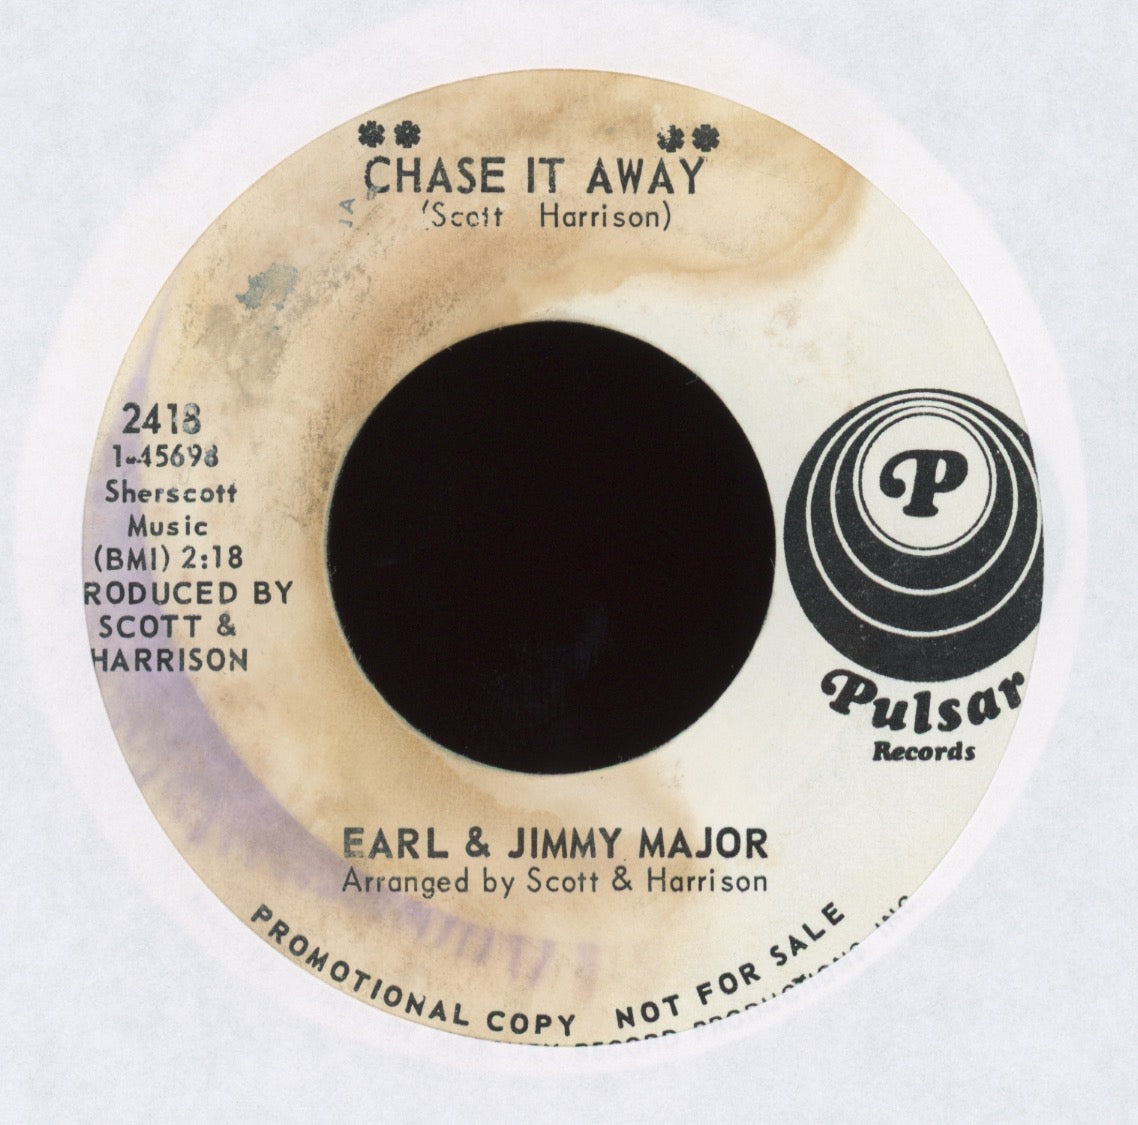 Earl & Jimmy Major - Chase It Away on Pulsar Promo